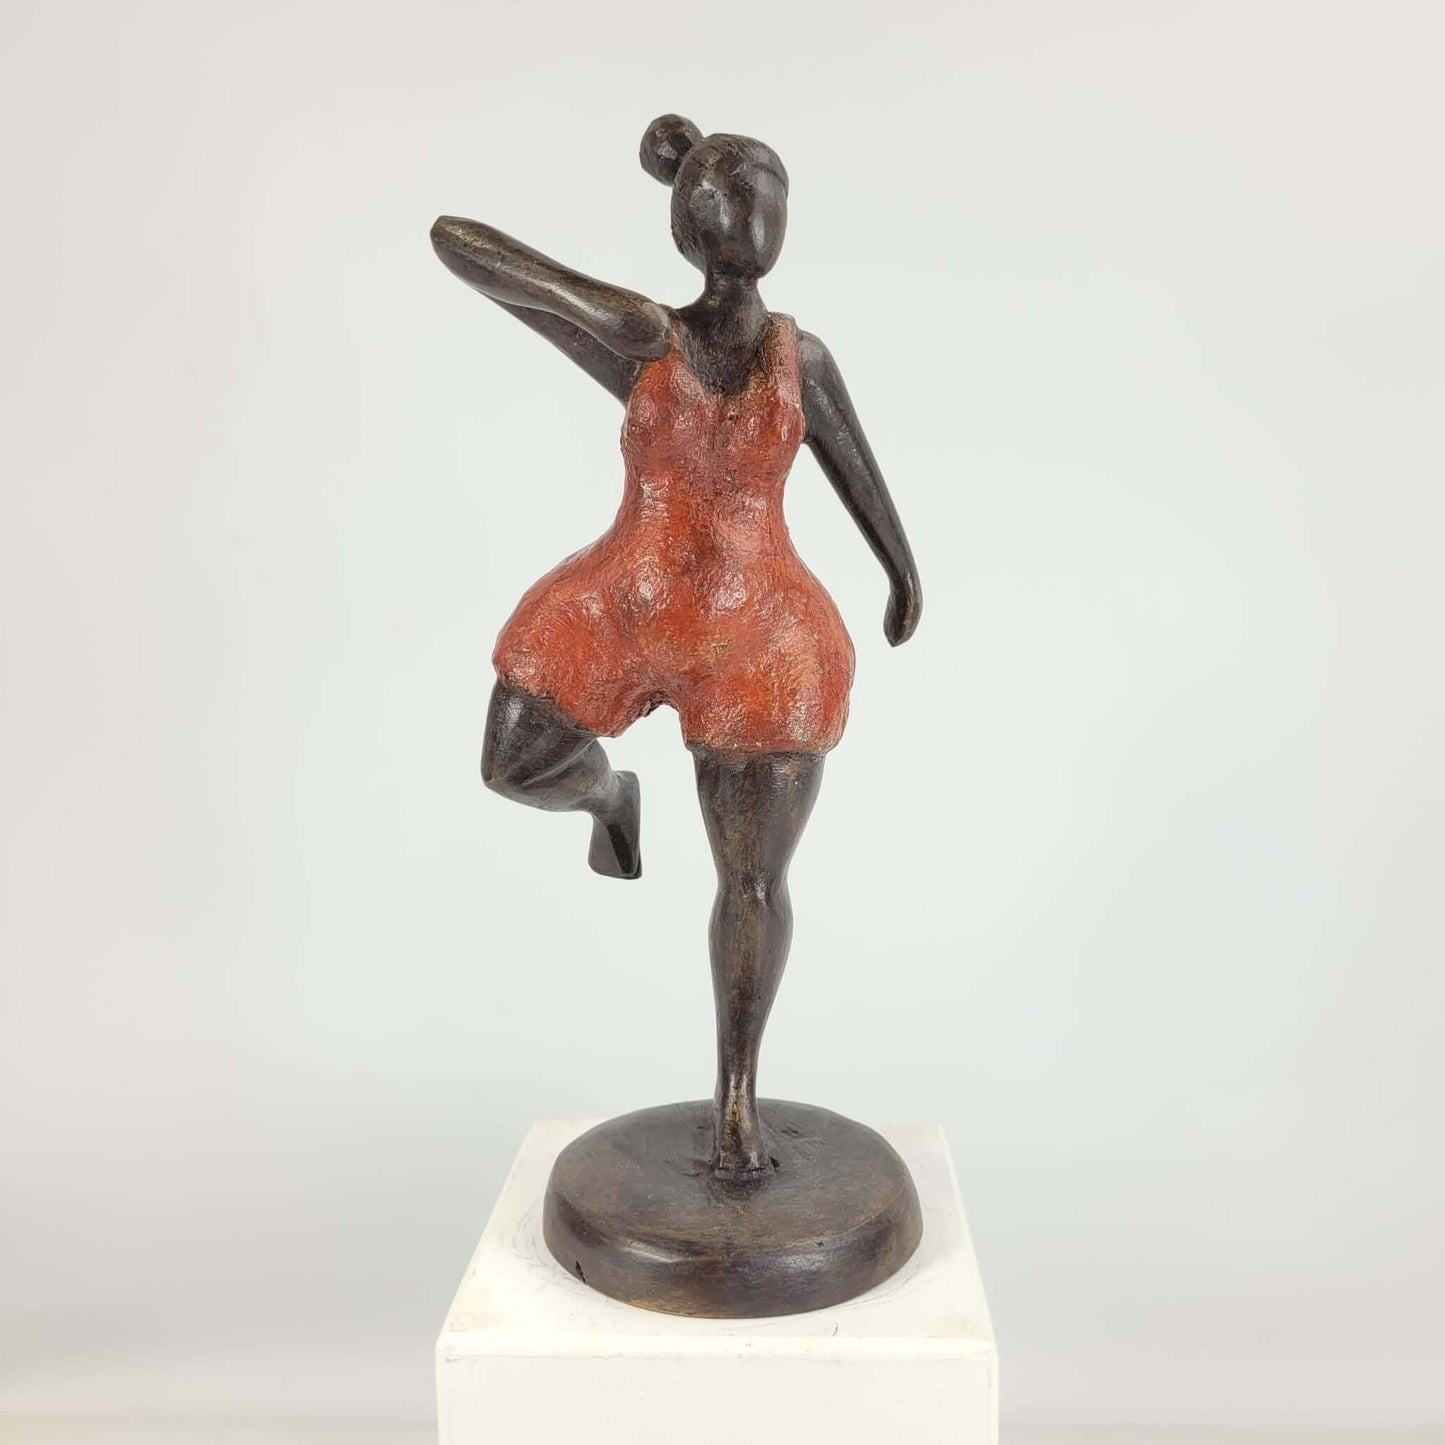 Bronze-Skulptur "Bobaraba gymnaste" by Soré | 1kg 23cm | Unikate